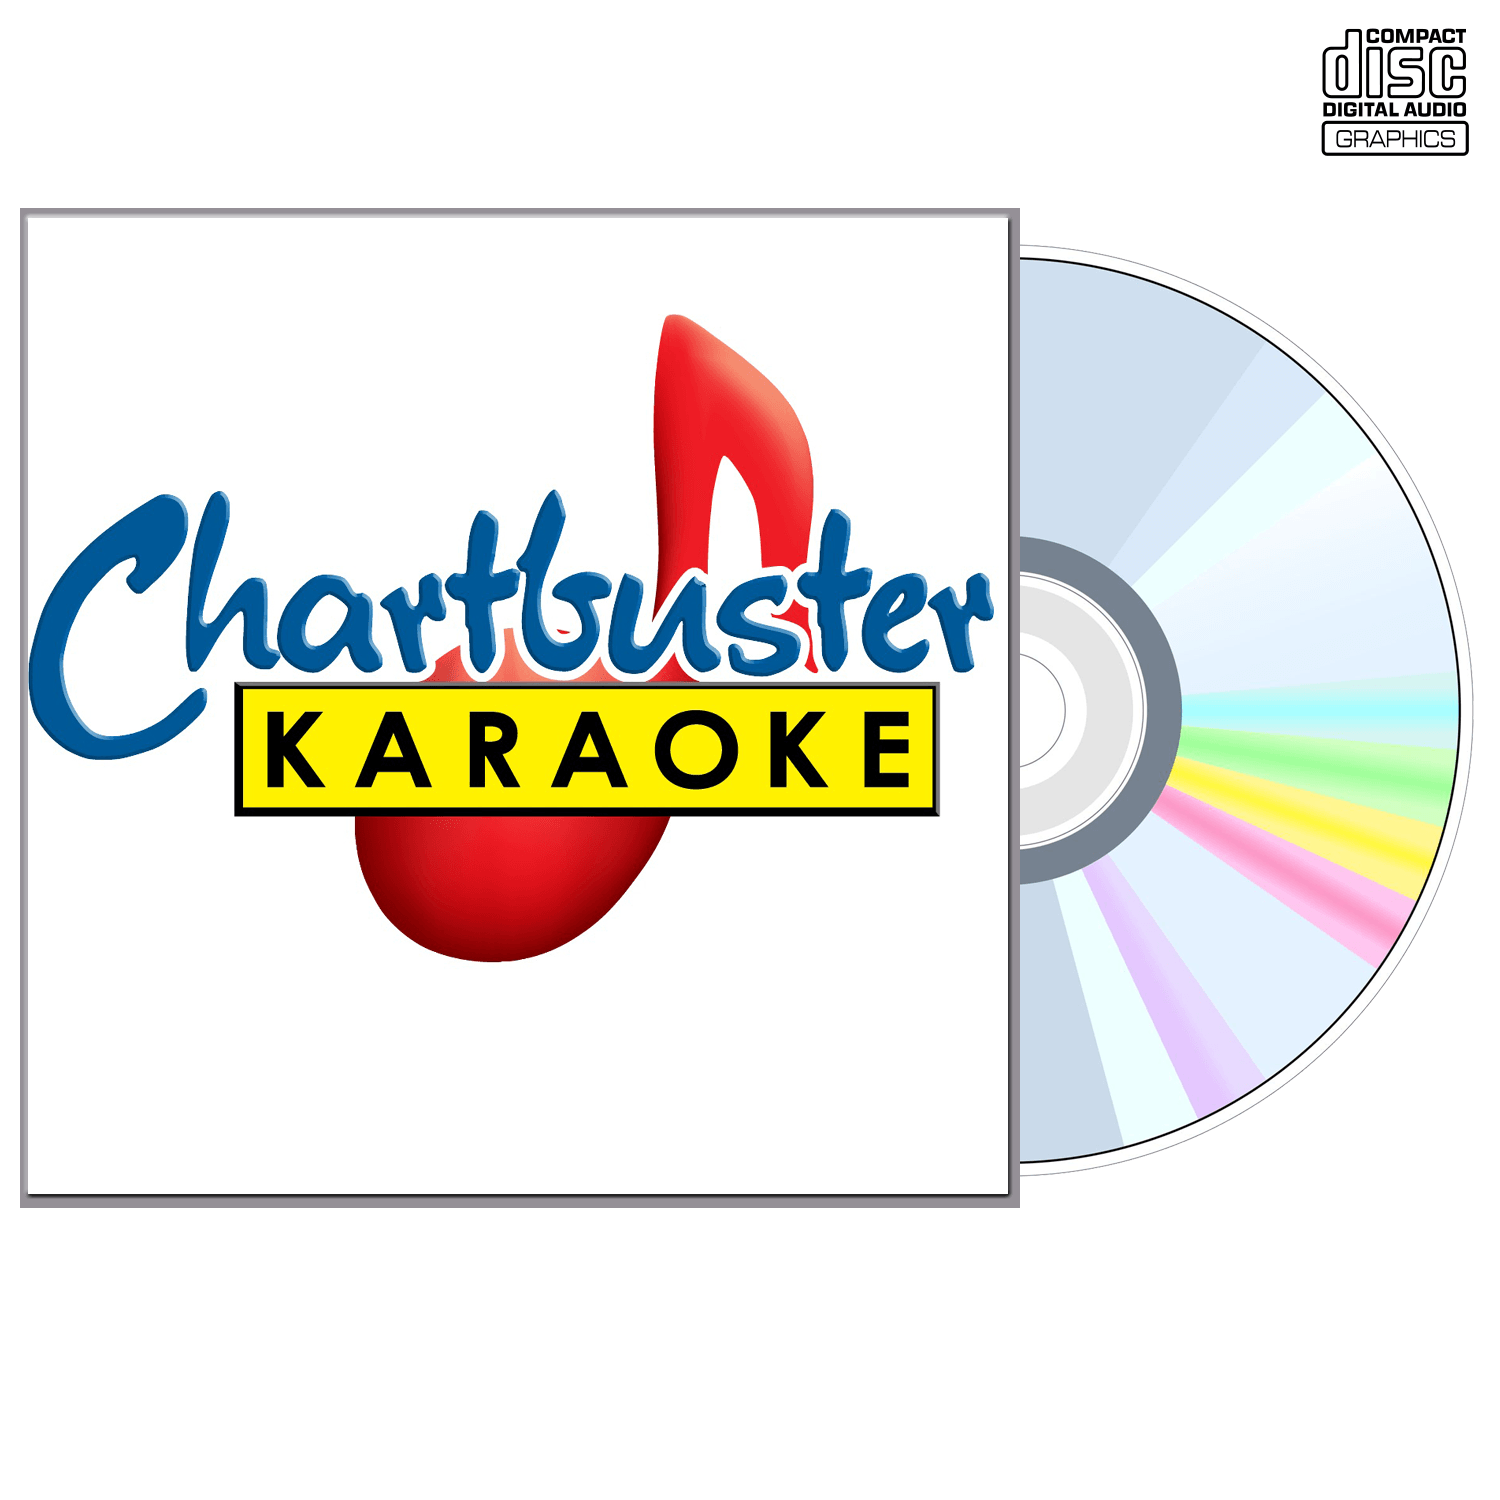 Country Mix Vol 15 - CD+G - Chartbuster Karaoke - Karaoke Home Entertainment